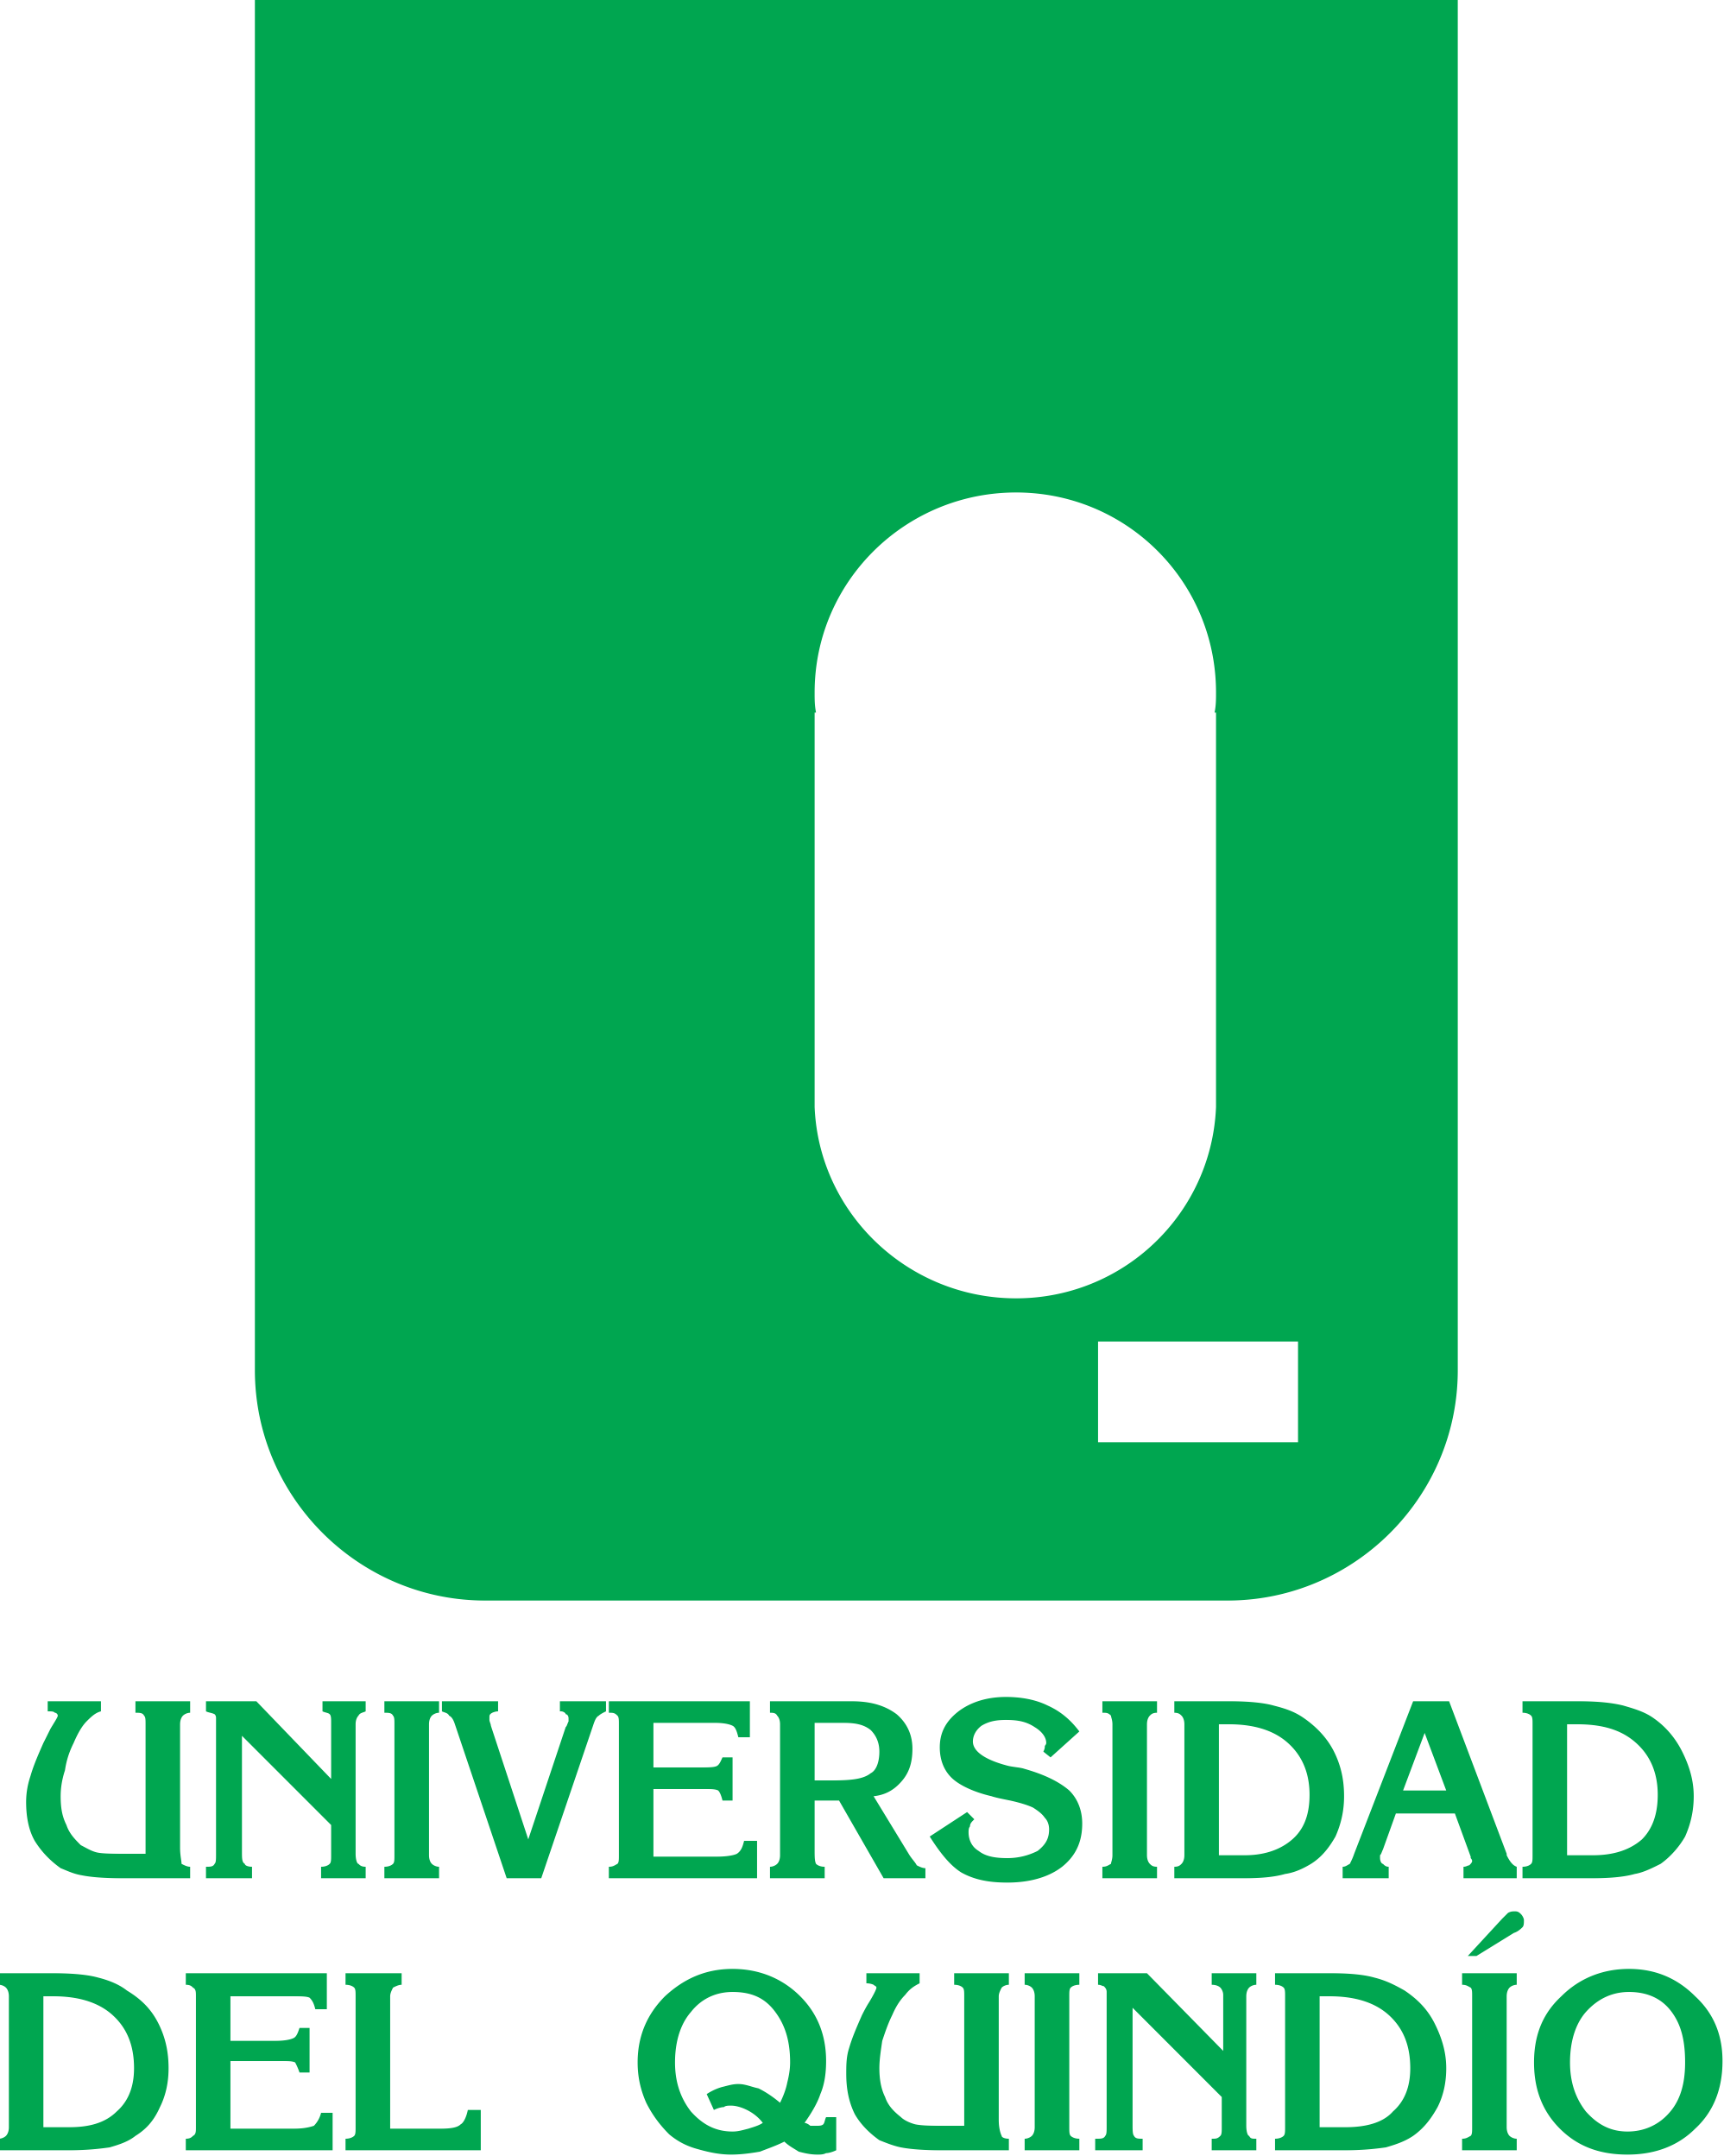 uq_logo.png 